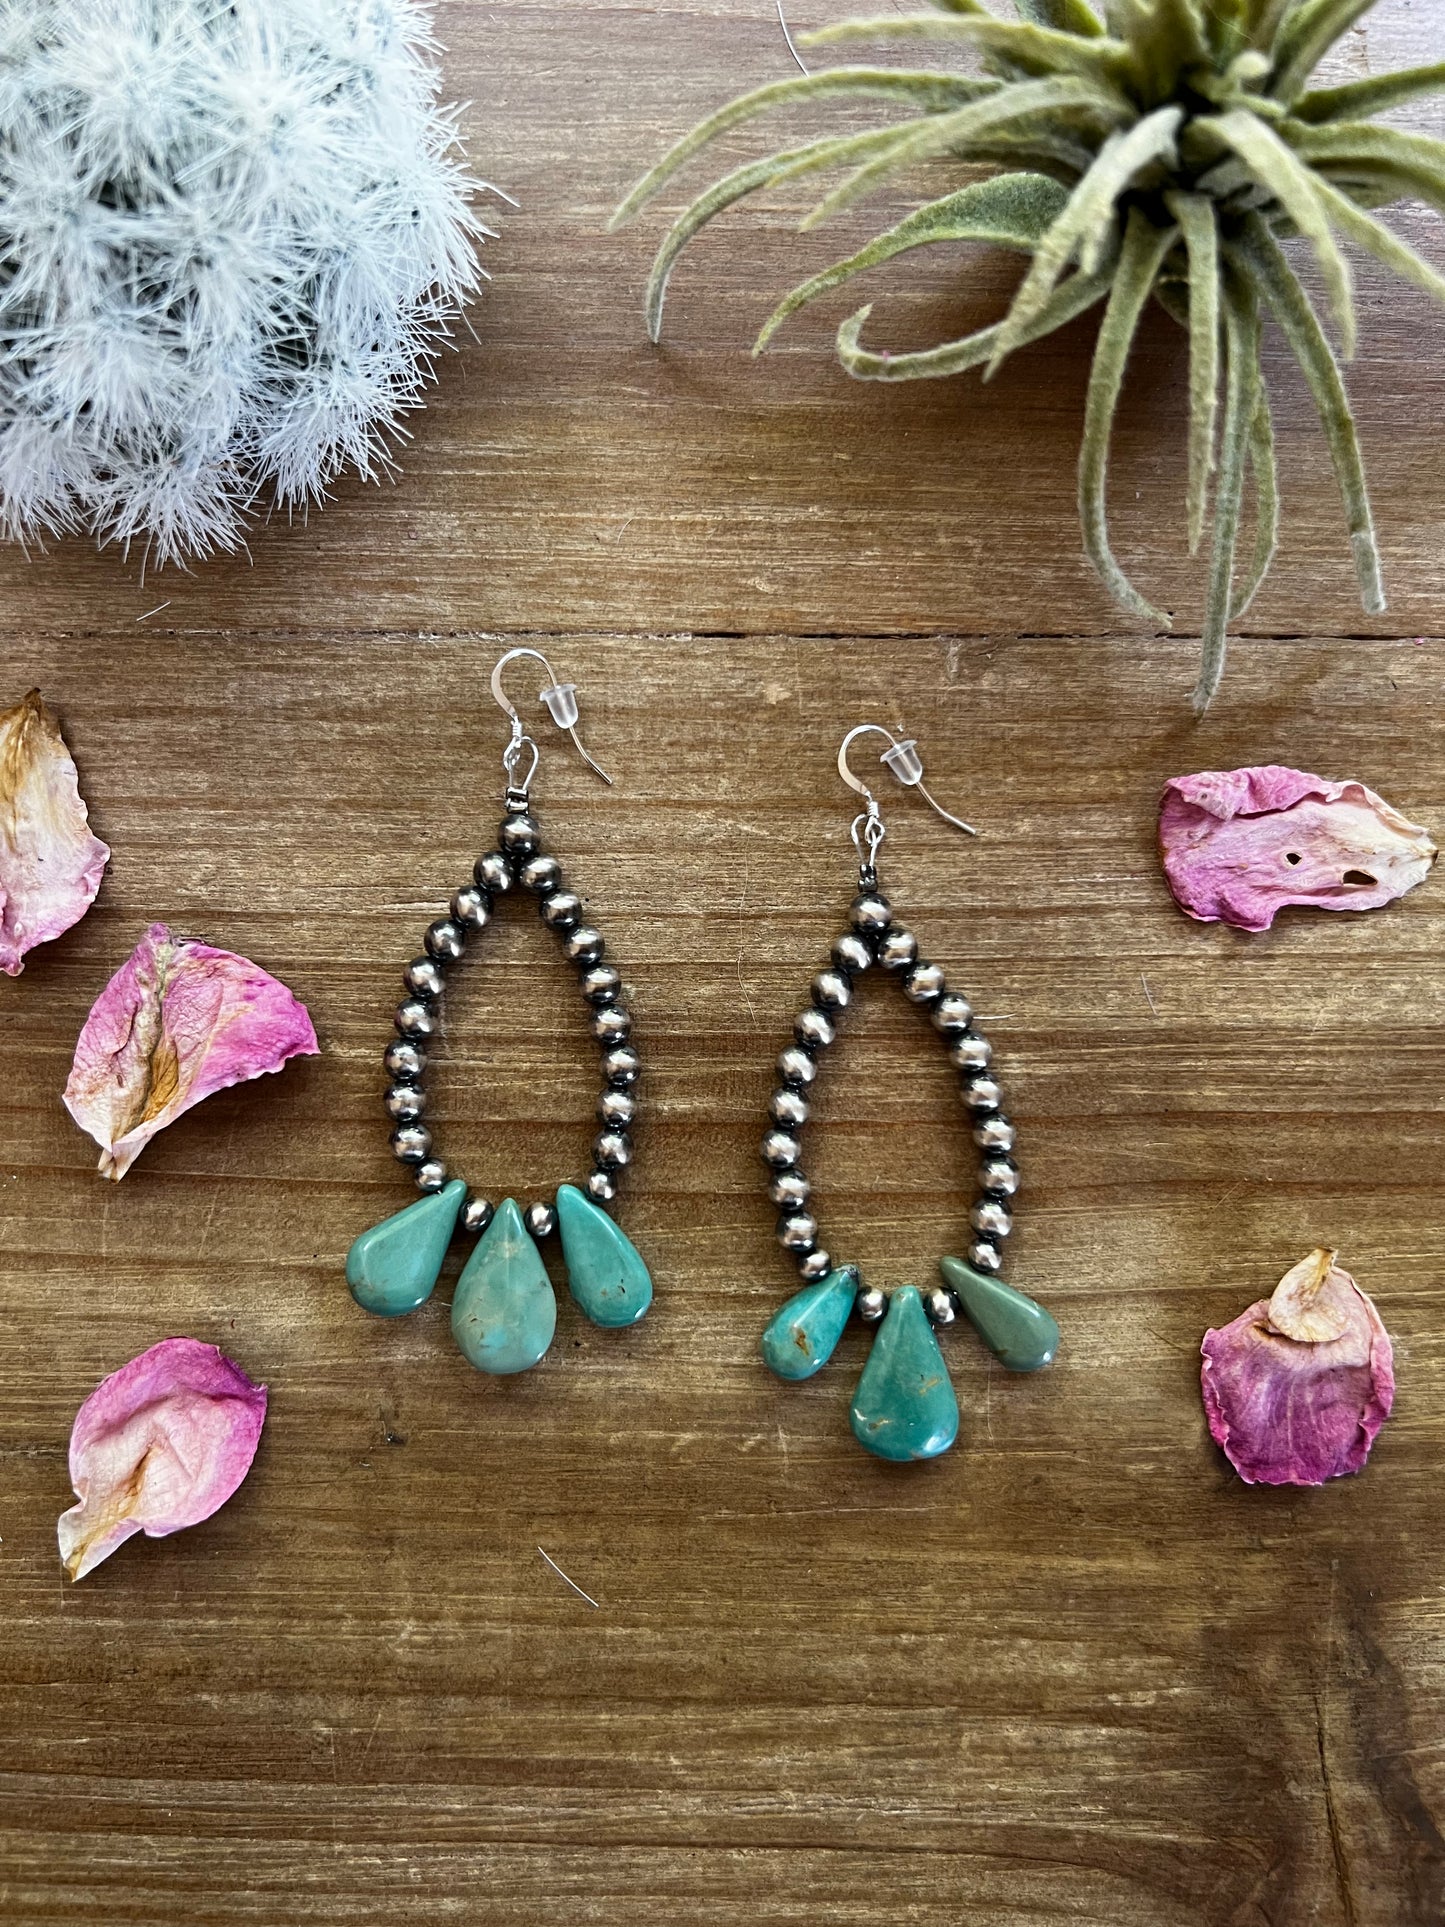 Teardrop turquoise and Navajo earrings - spring